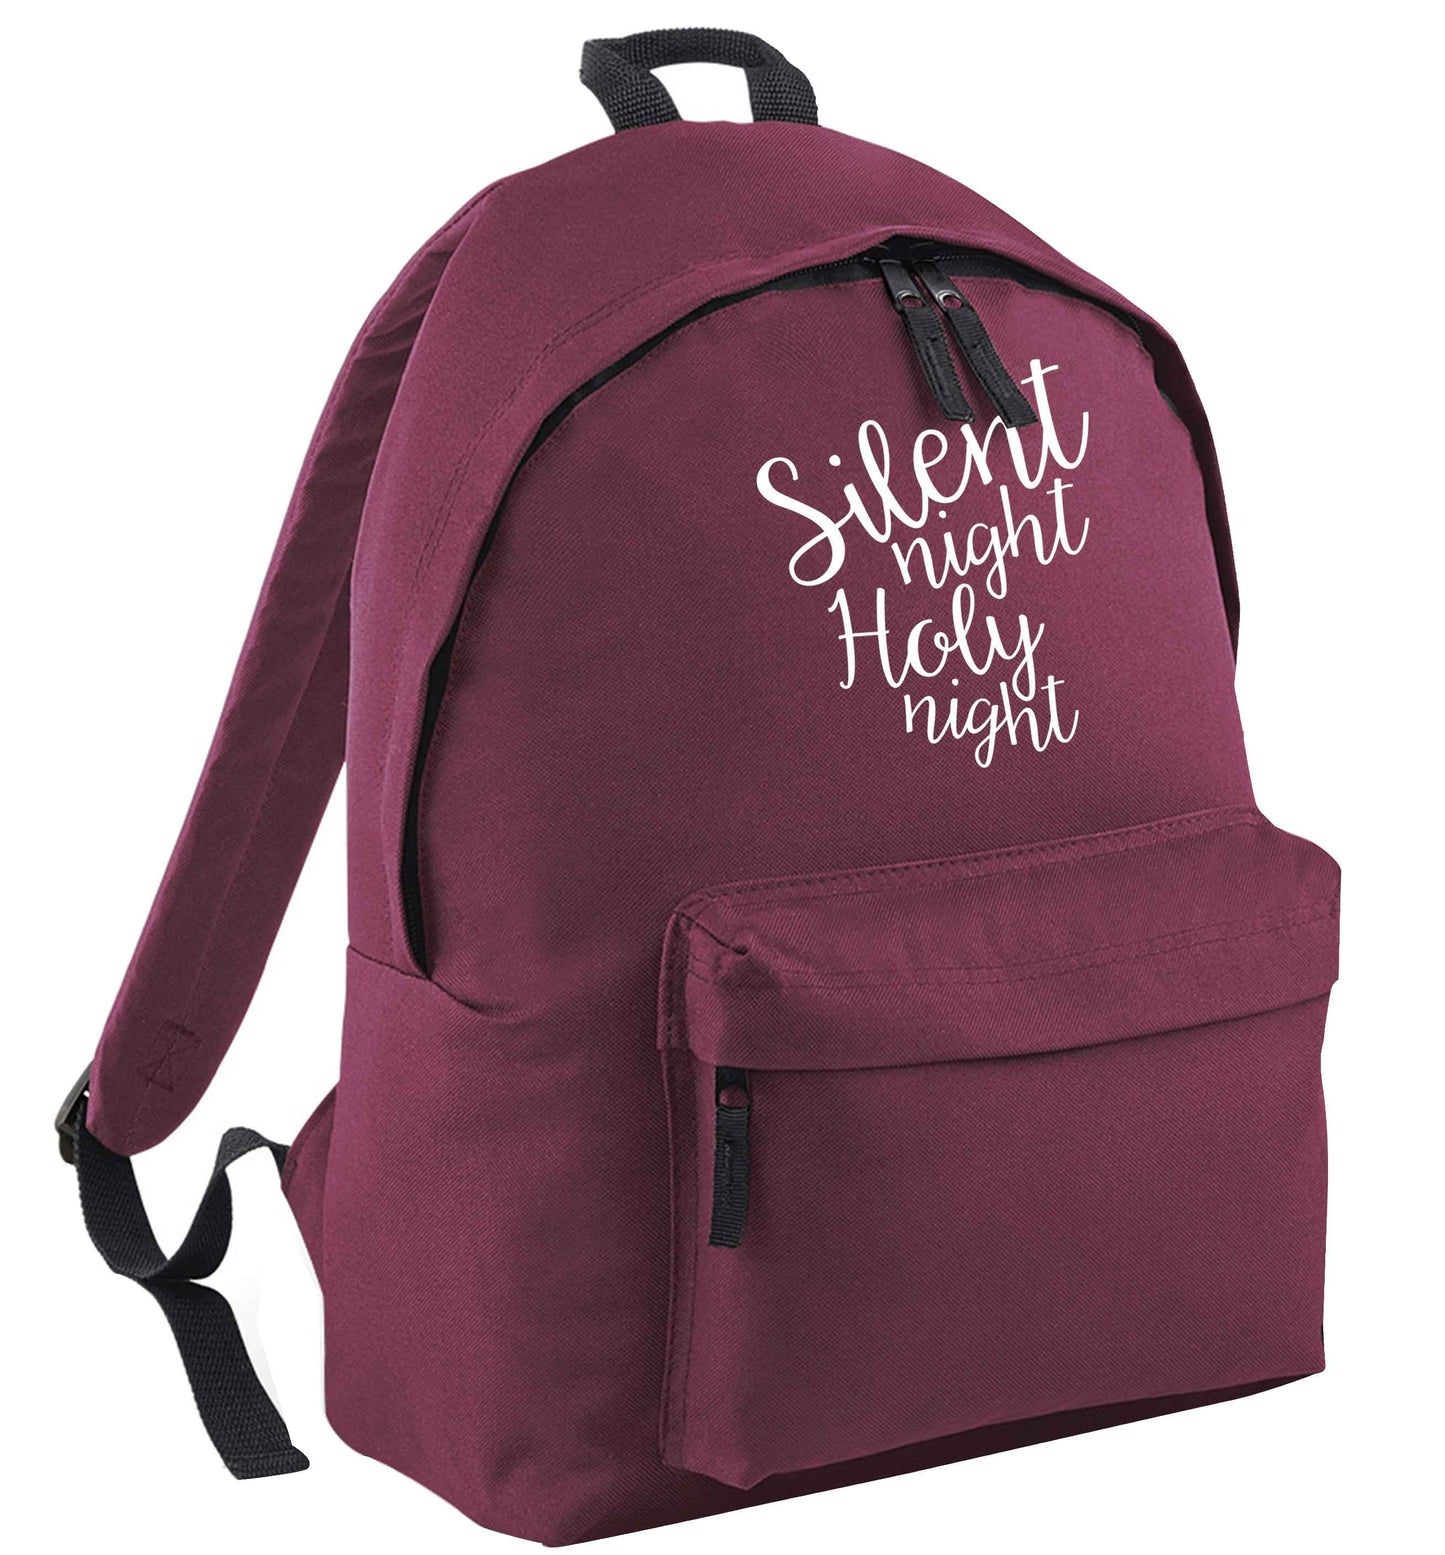 Silent night holy night | Children's backpack